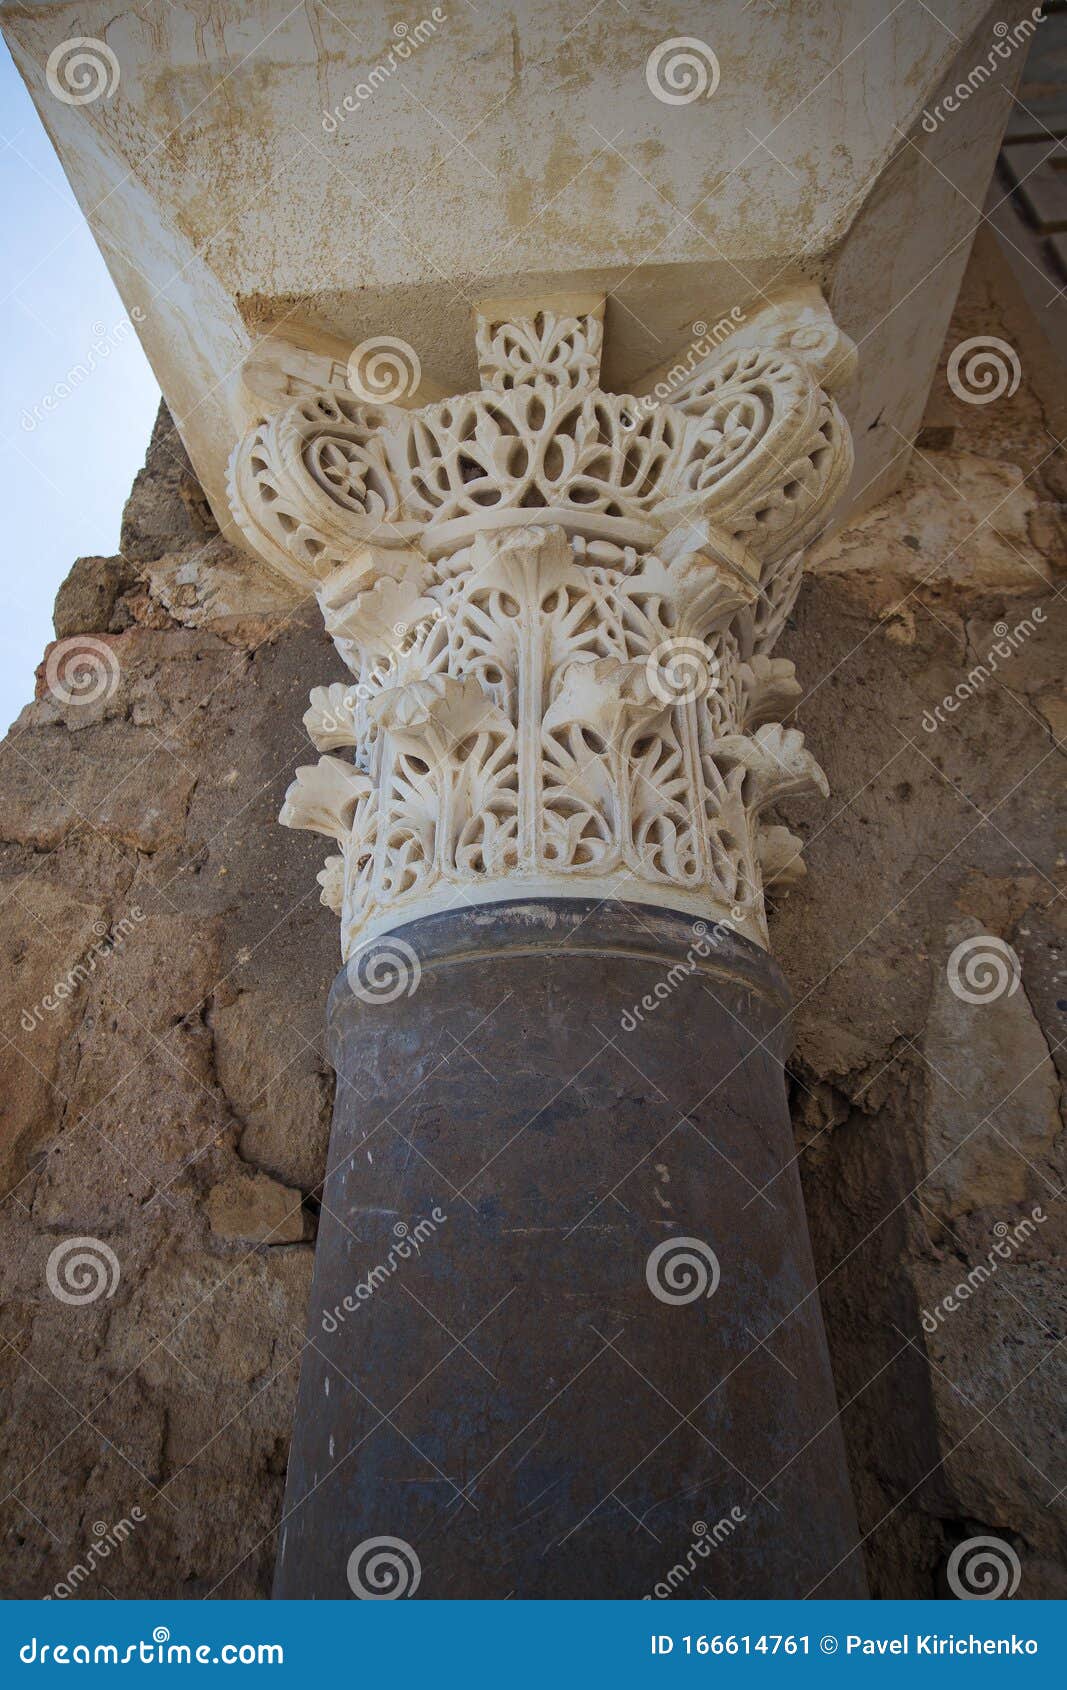 ruins of medina azahara - vast, fortified andalus palace-city